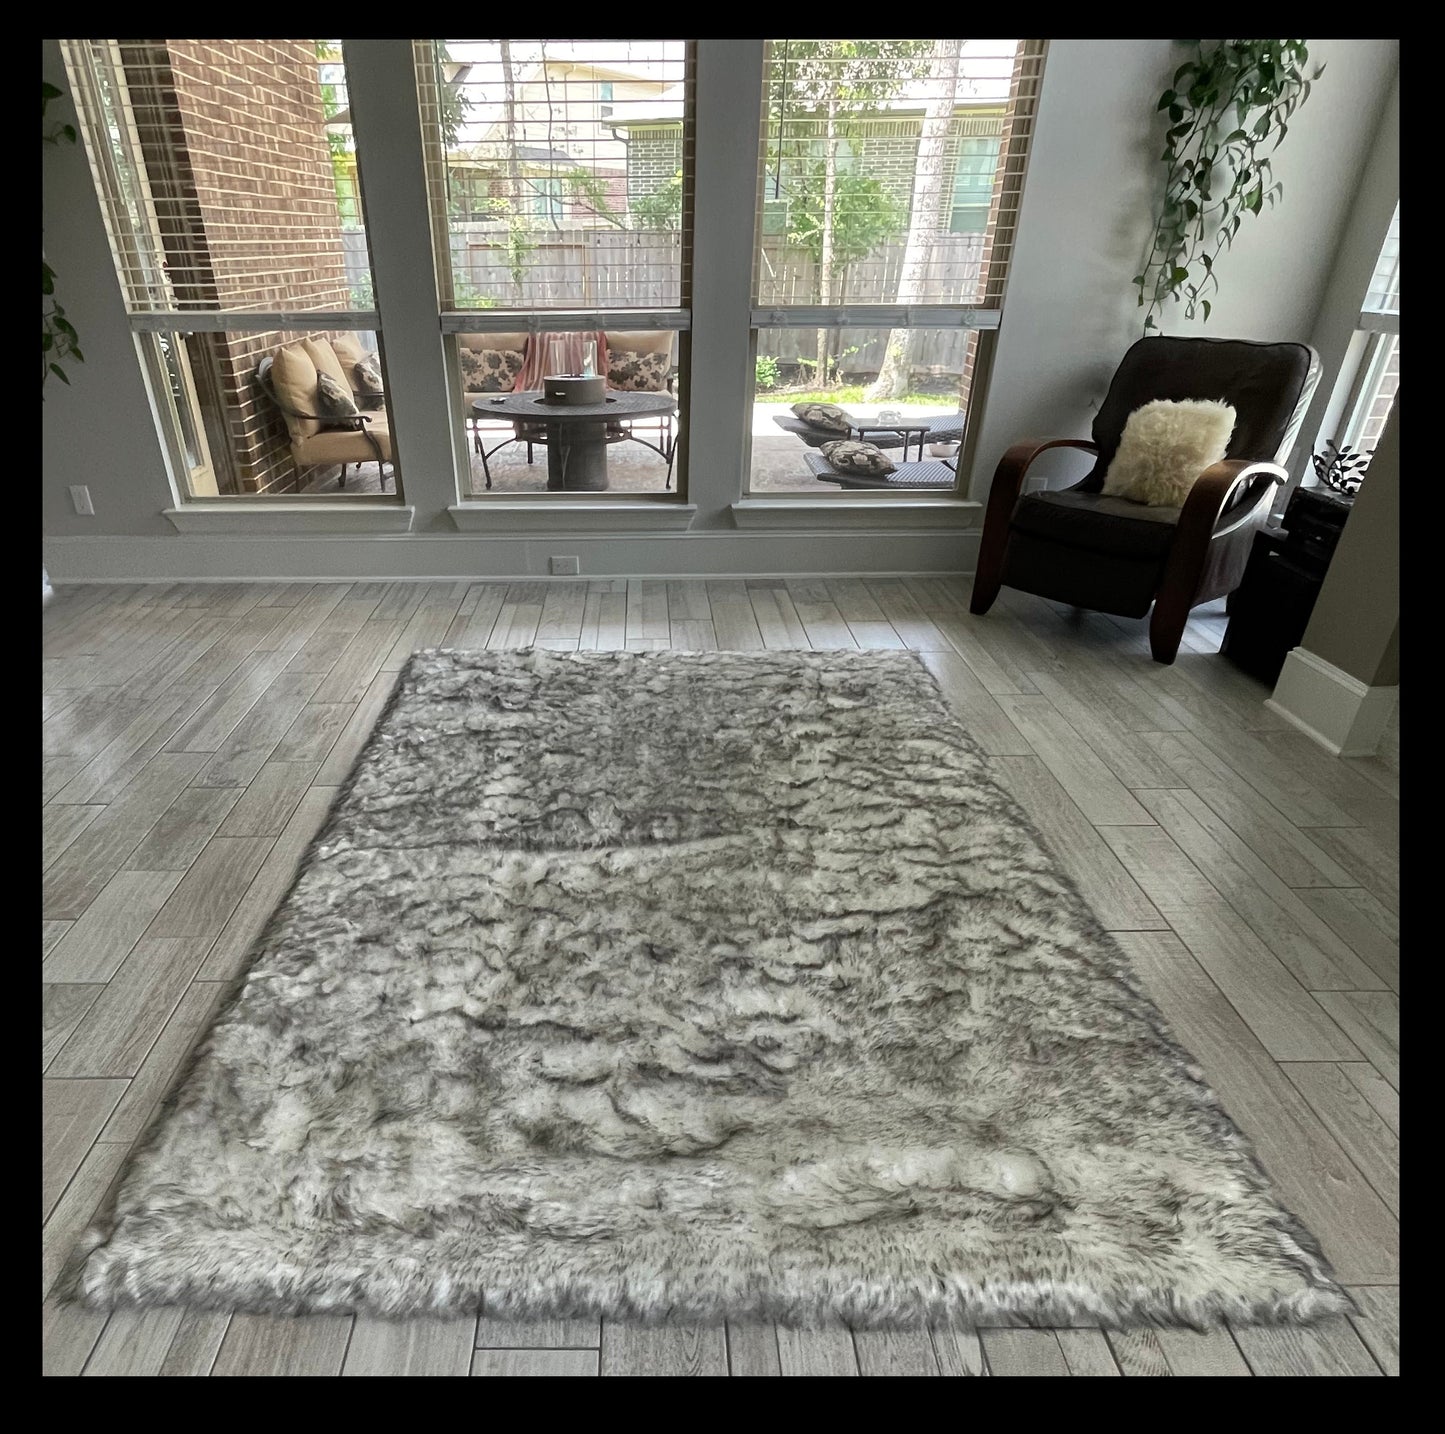 Faux sheepskin rug Rectangle Shaped 5'X8' (160cm x 240cm)